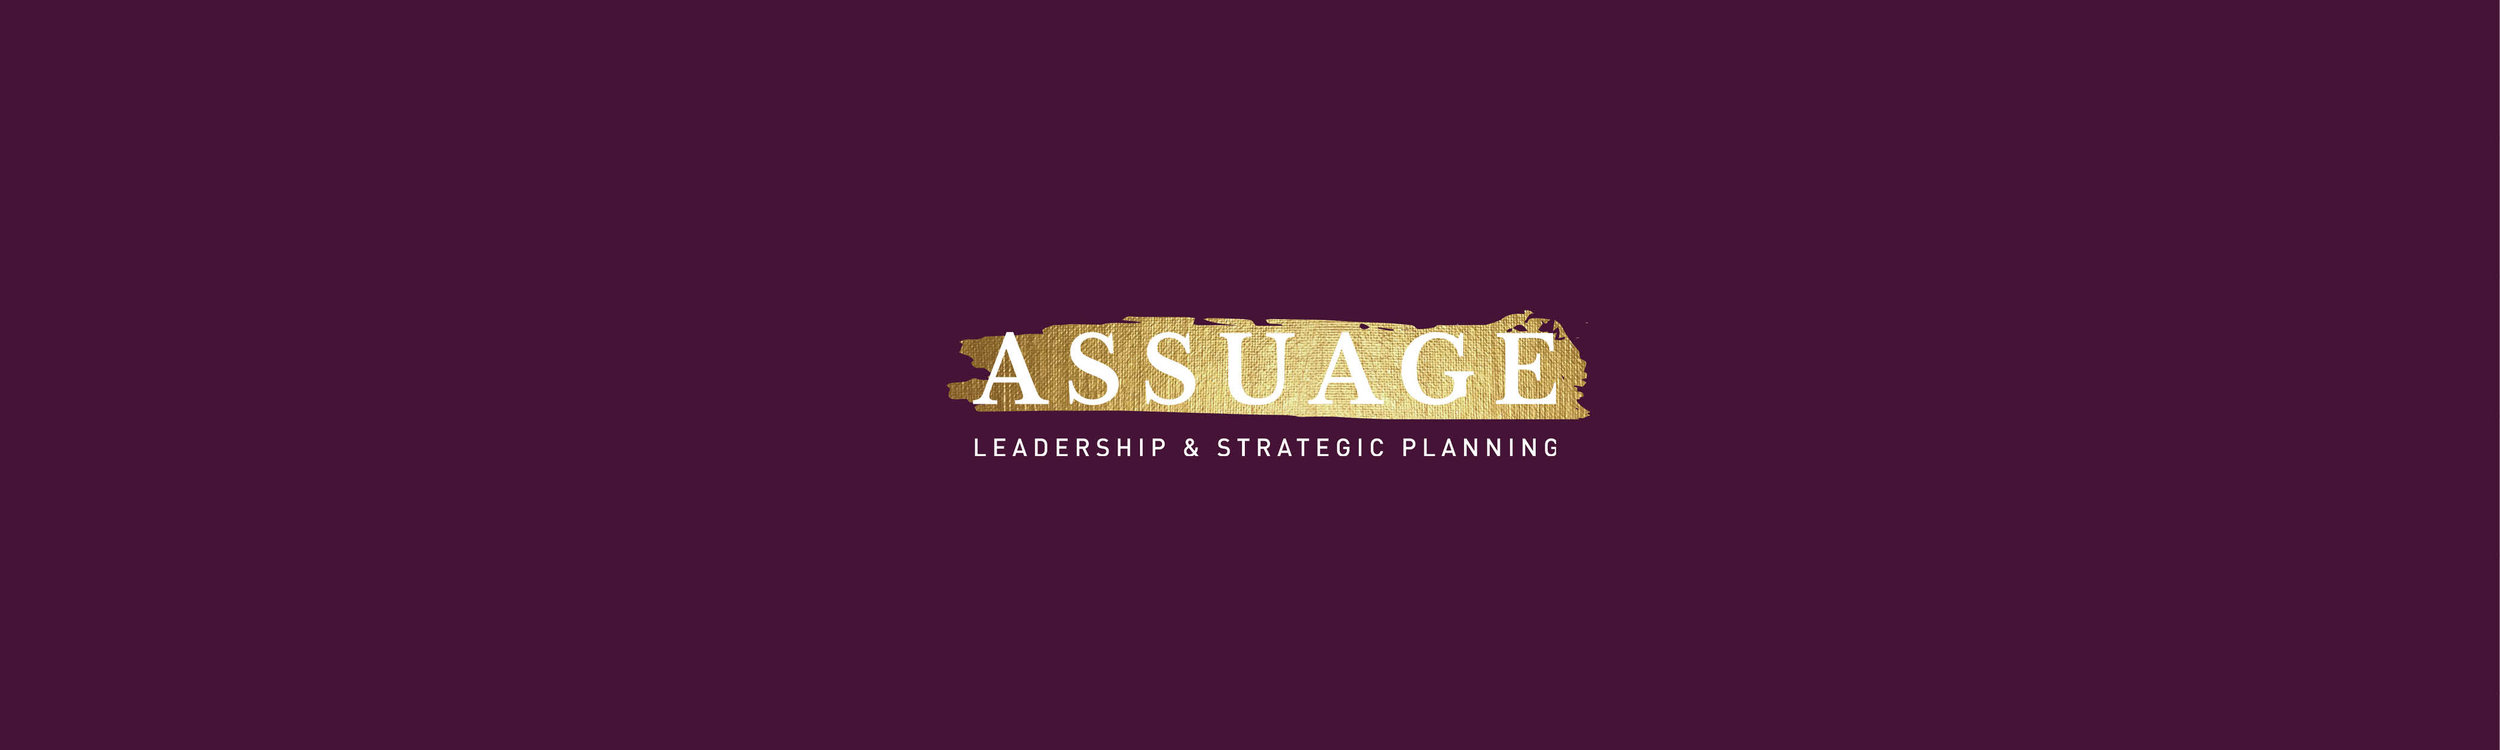 Assuage Branding by Casi Long Design | casilong.com 5.jpg